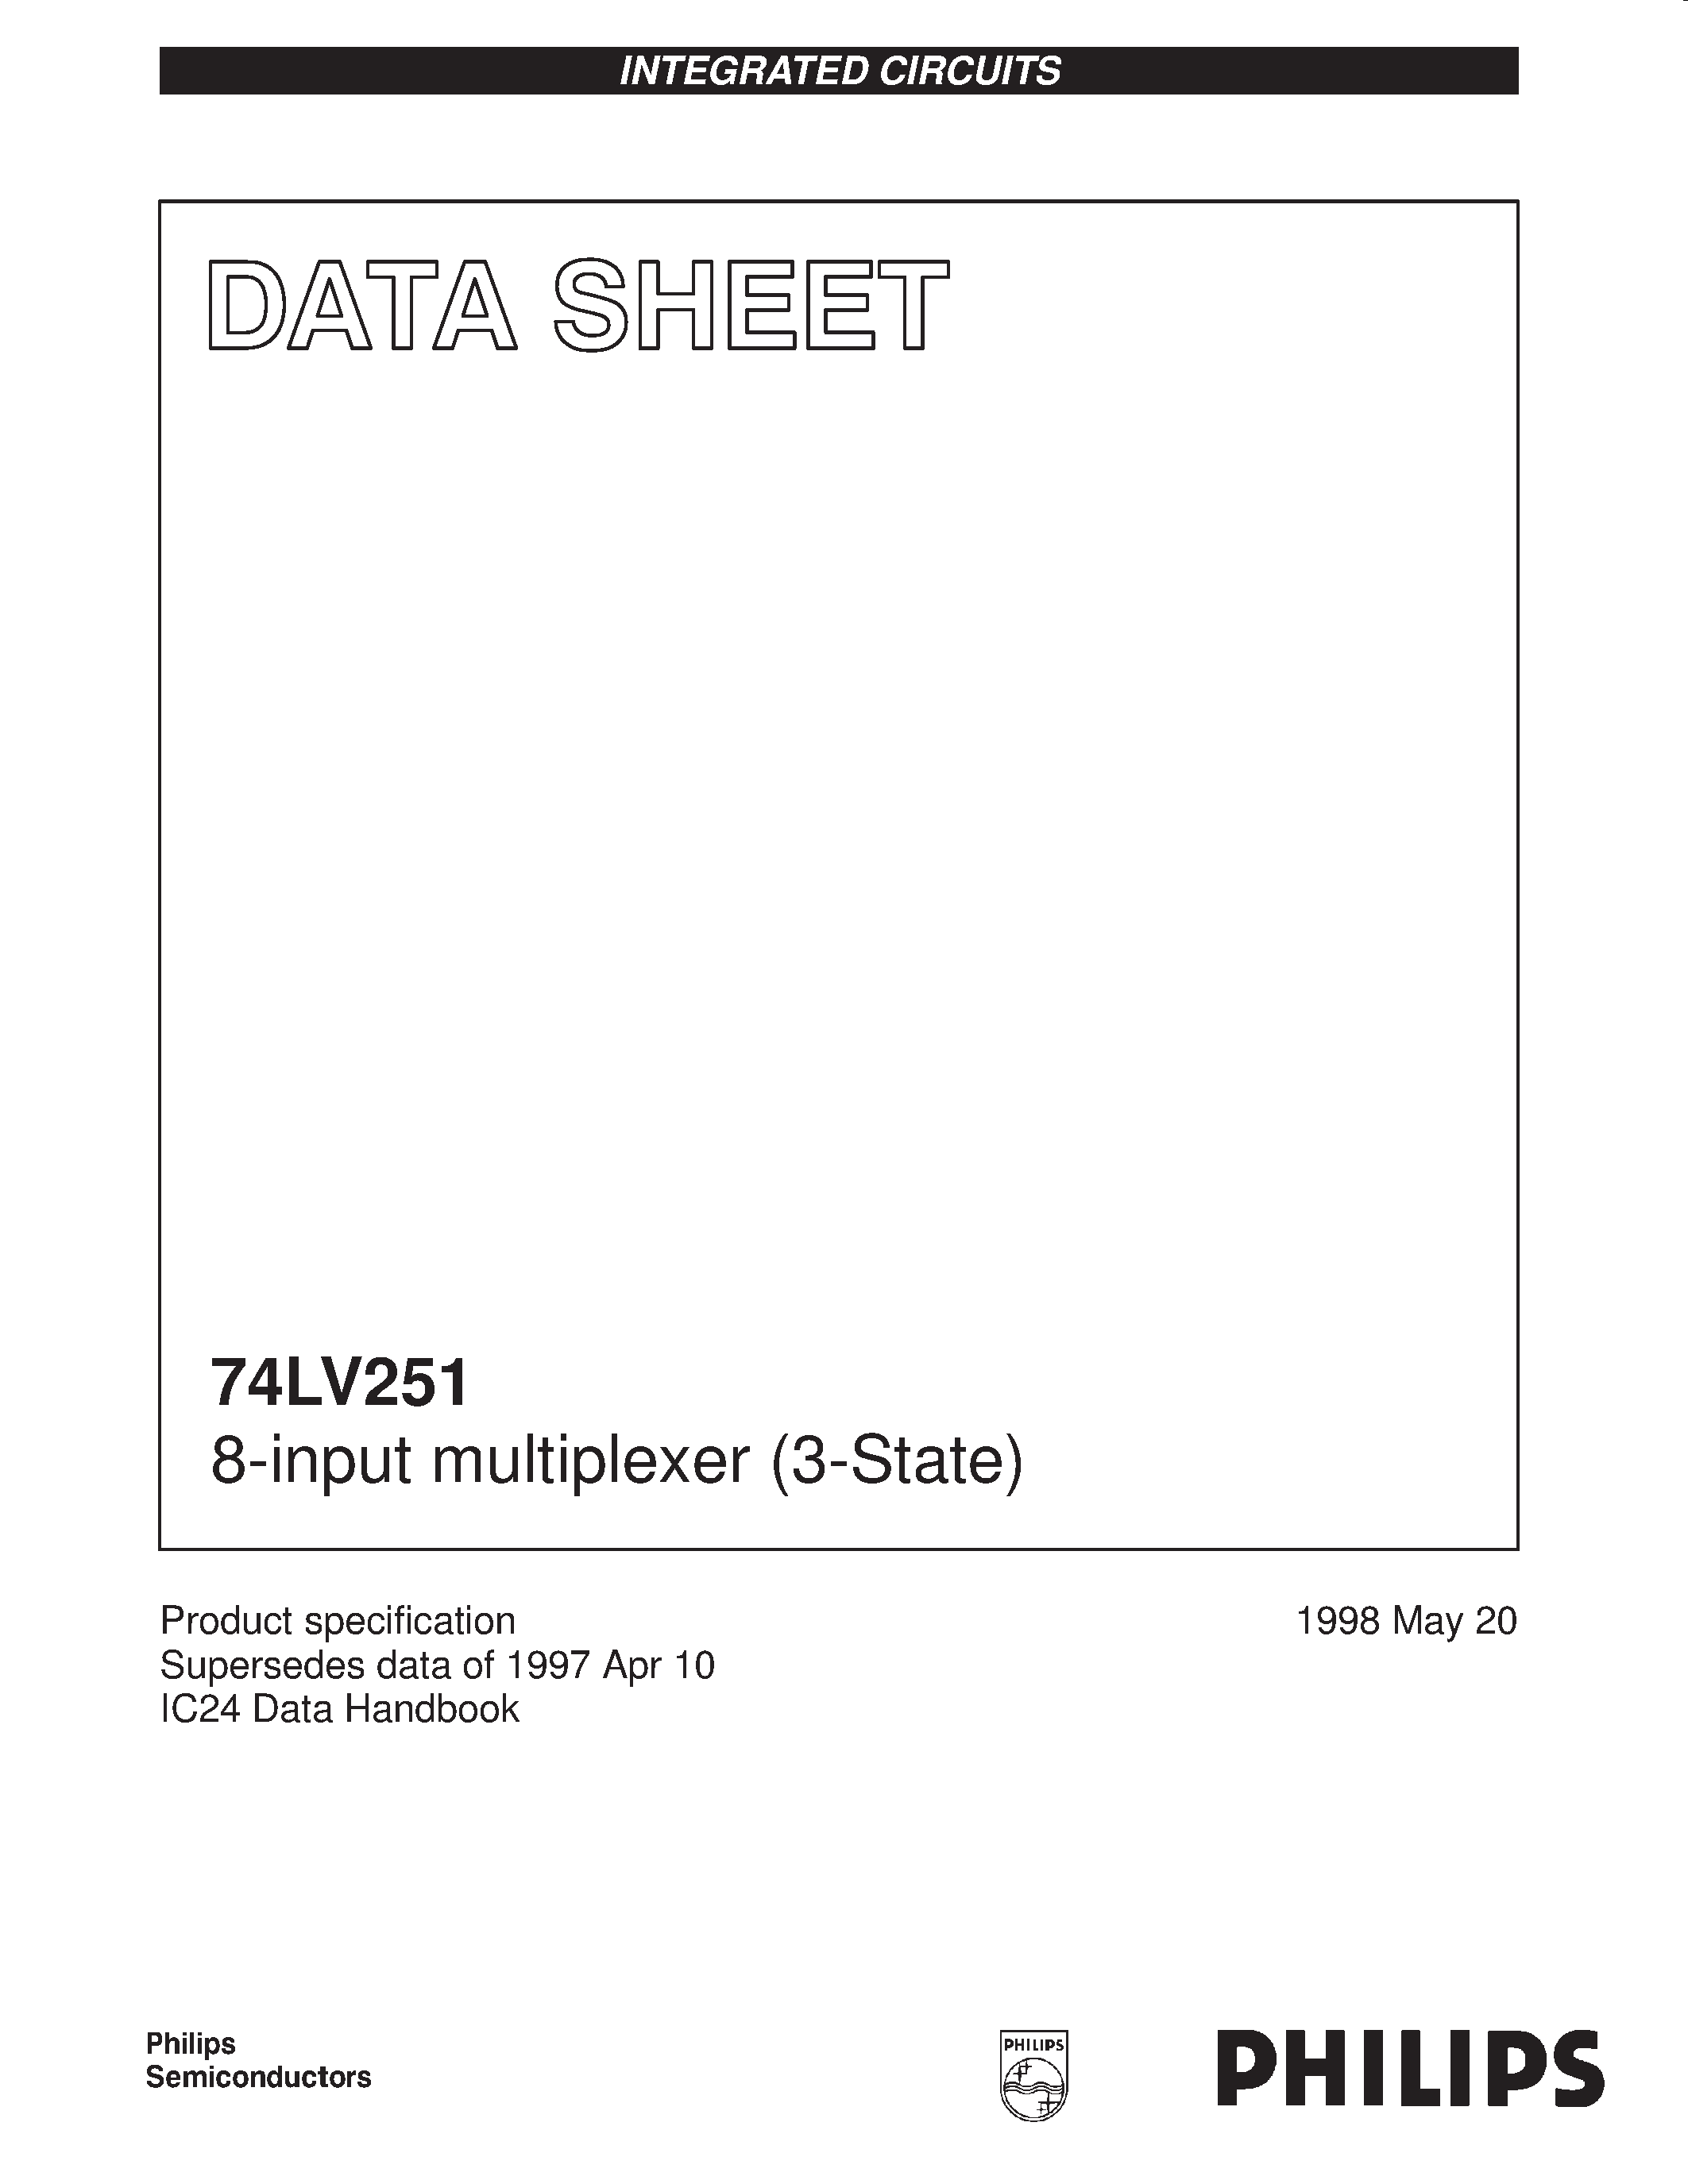 Даташит 74LV251 - 8-input multiplexer 3-State страница 1